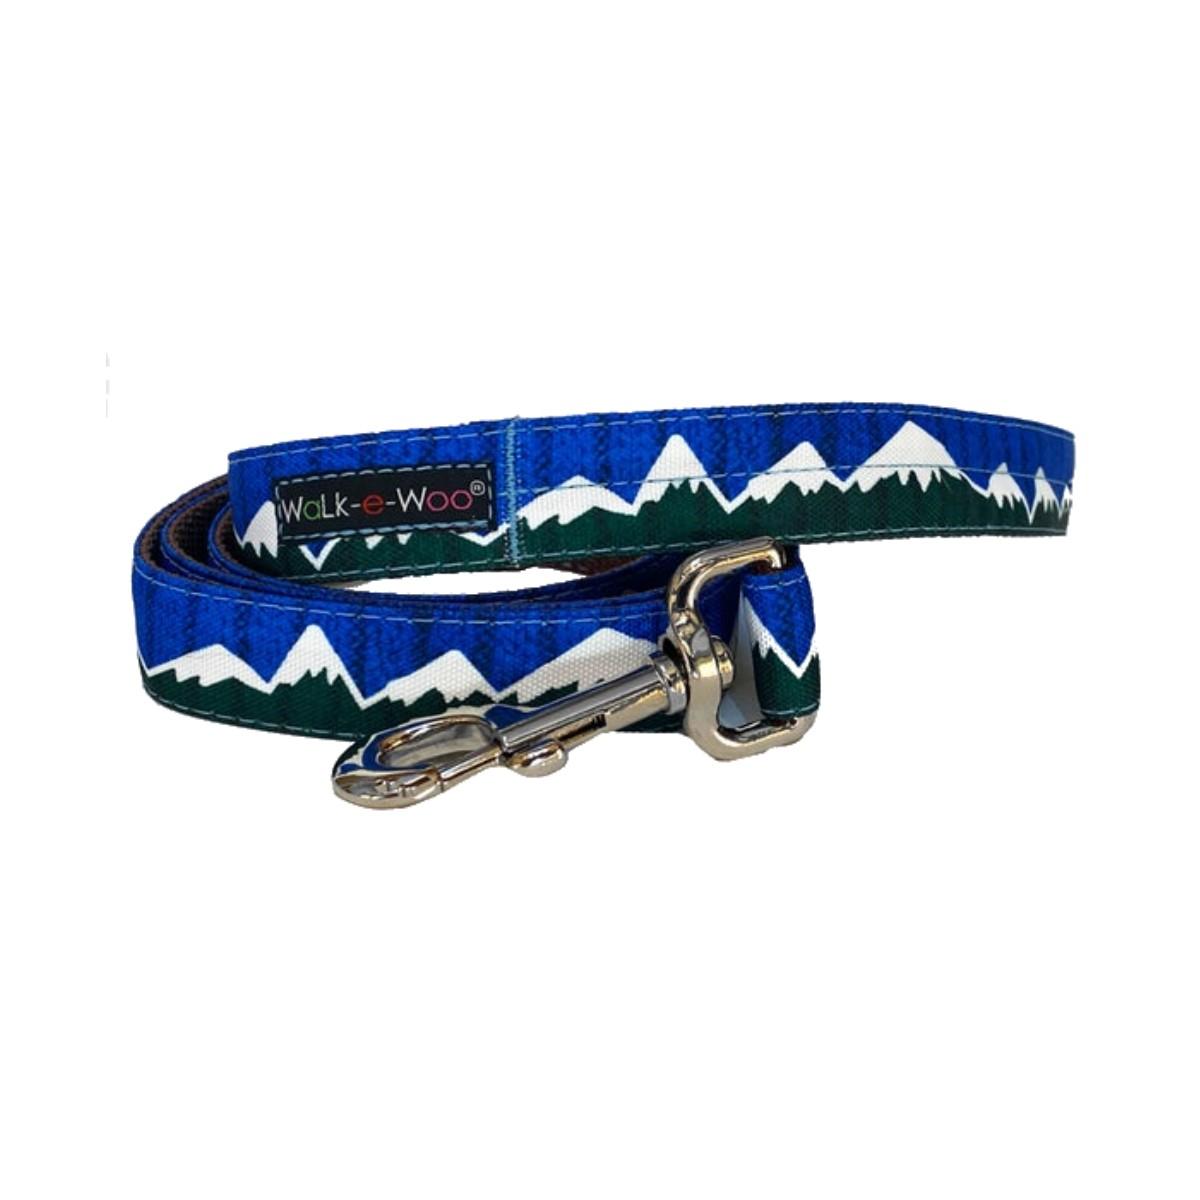 WaLk-e-Woo Snowcap Mountain Dog Leash - Blue/Green